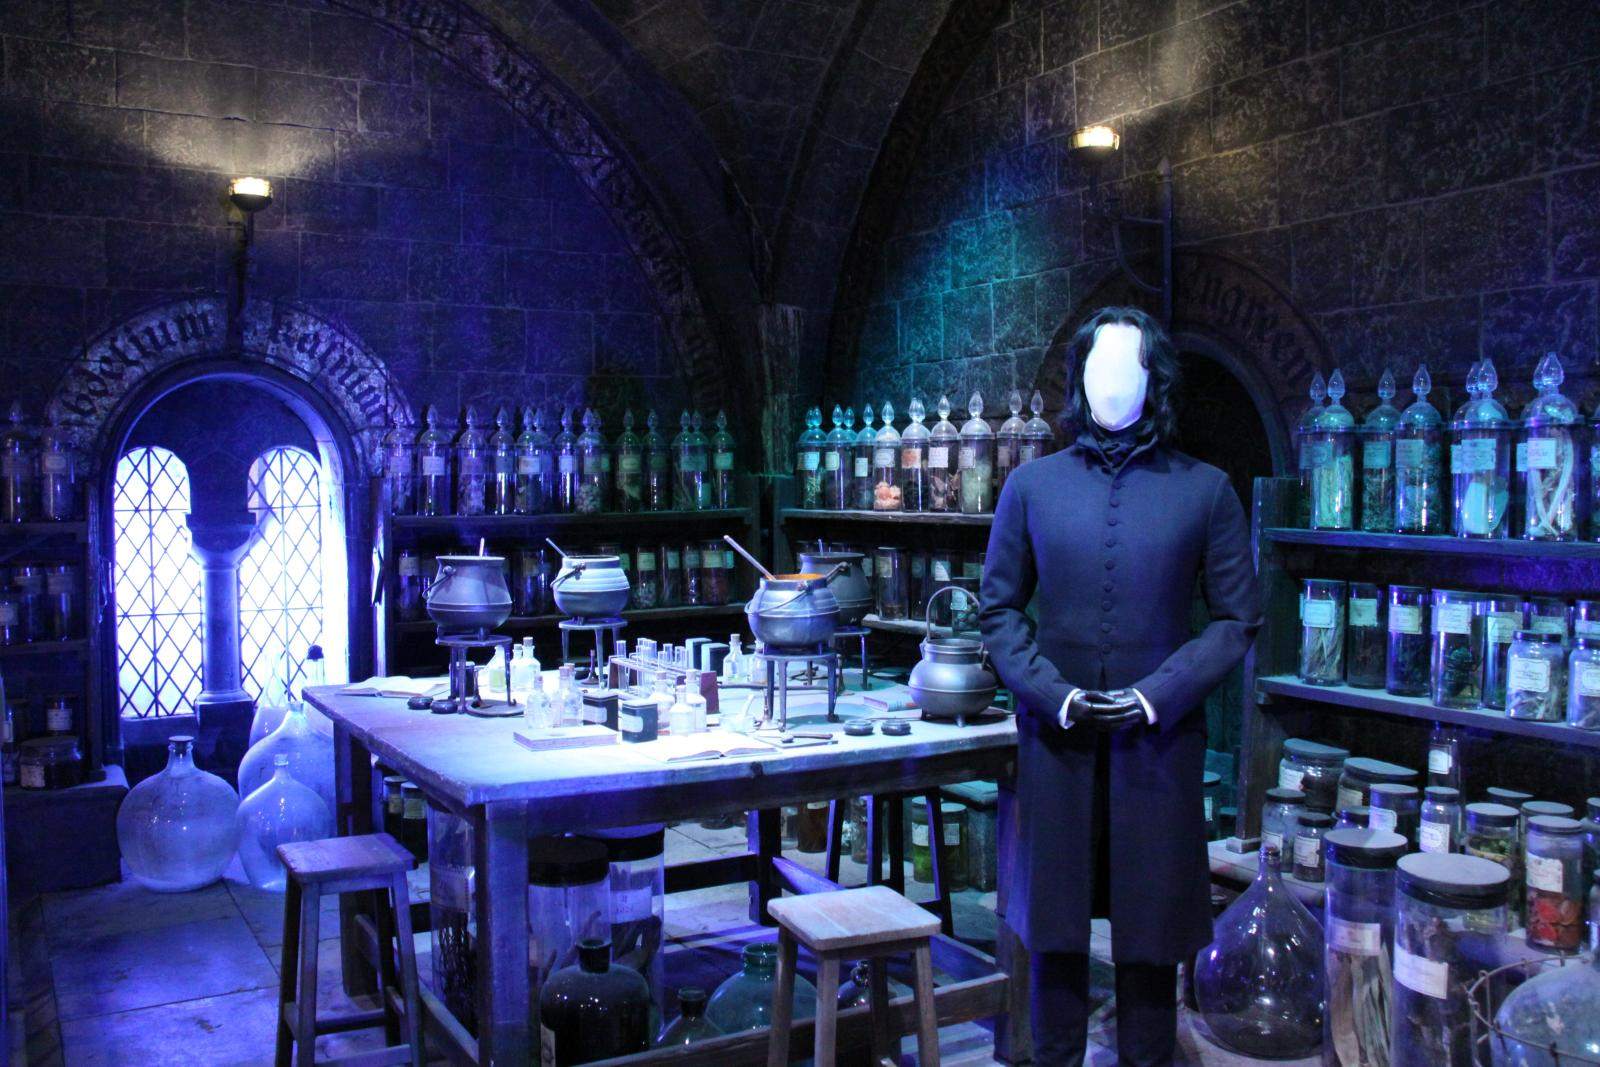 making harry potter9 The Making of Harry Potter, Warner Bros Studio London